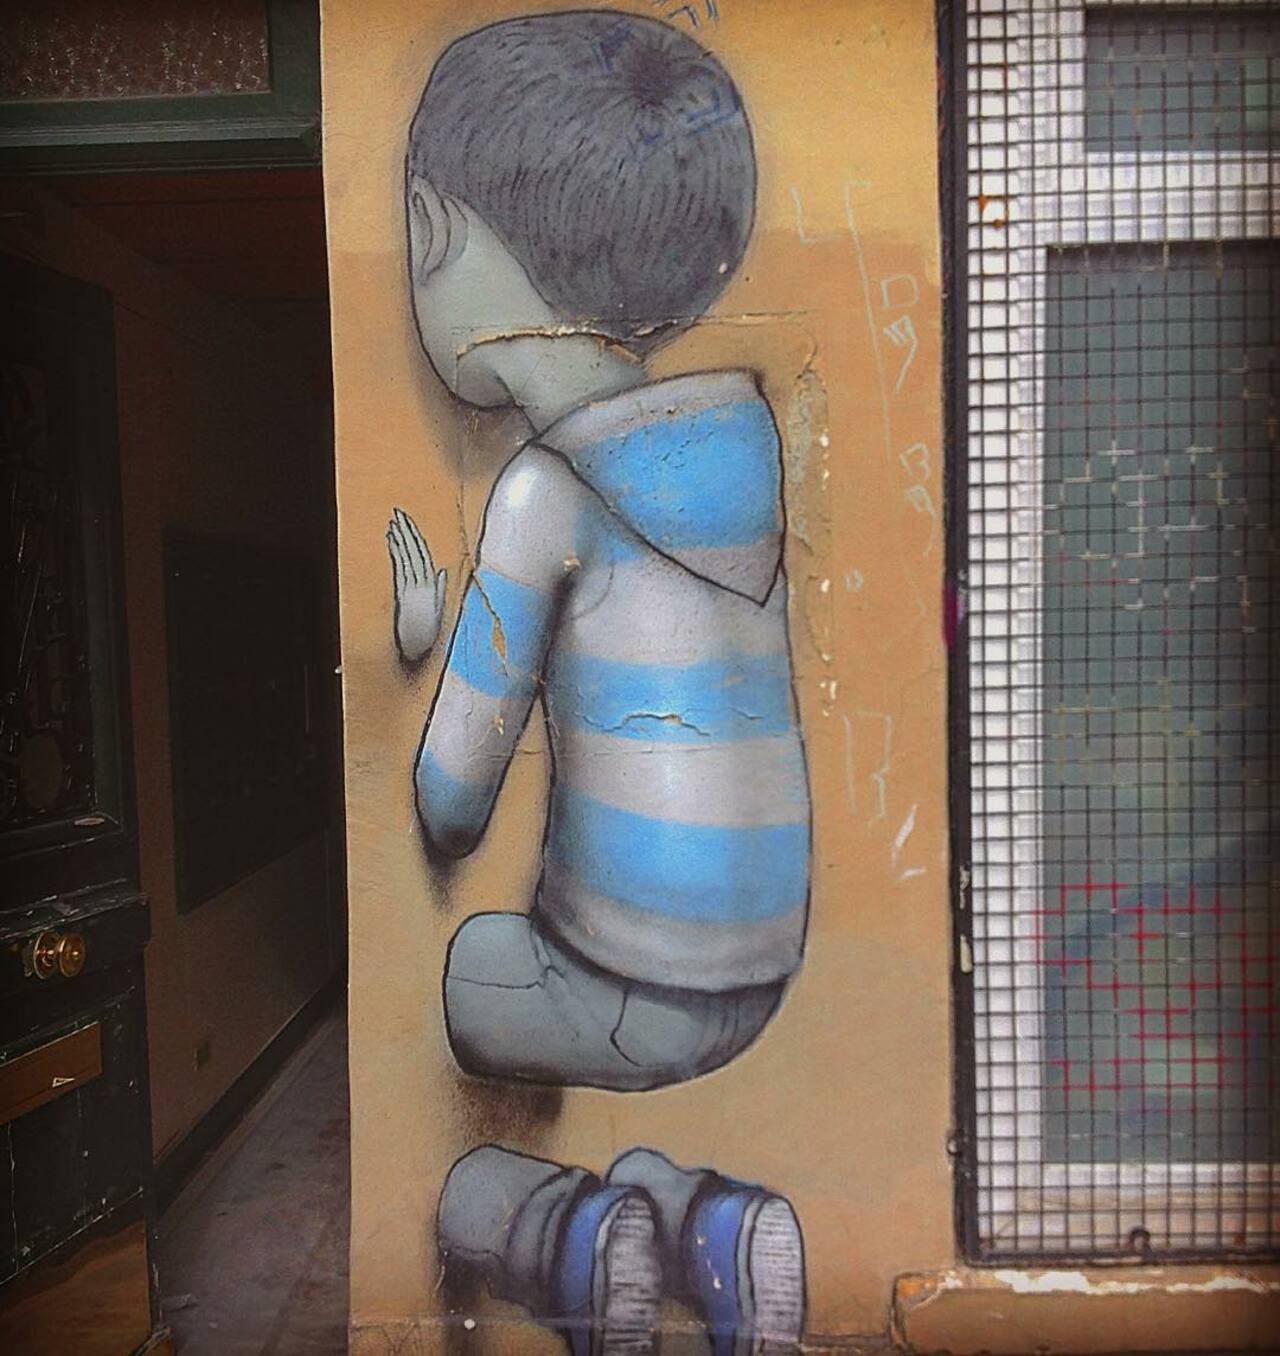 circumjacent_fr: #Paris #graffiti photo by stefetlinda http://ift.tt/1i1mg9u #StreetArt https://t.co/QMRbItR8h8